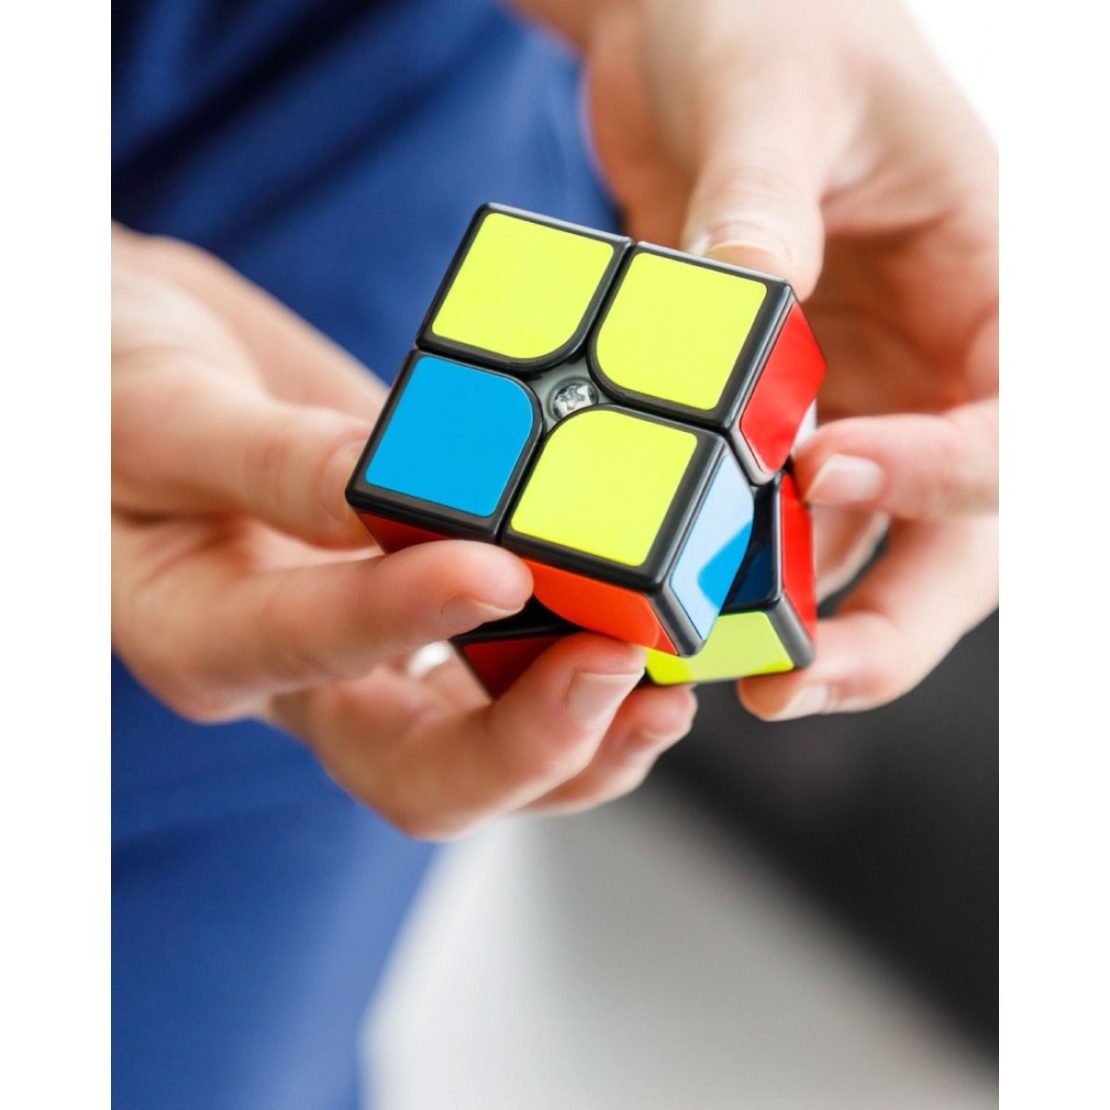 Cubidi 2x2 puzzle cube in Los Angeles Color Scheme